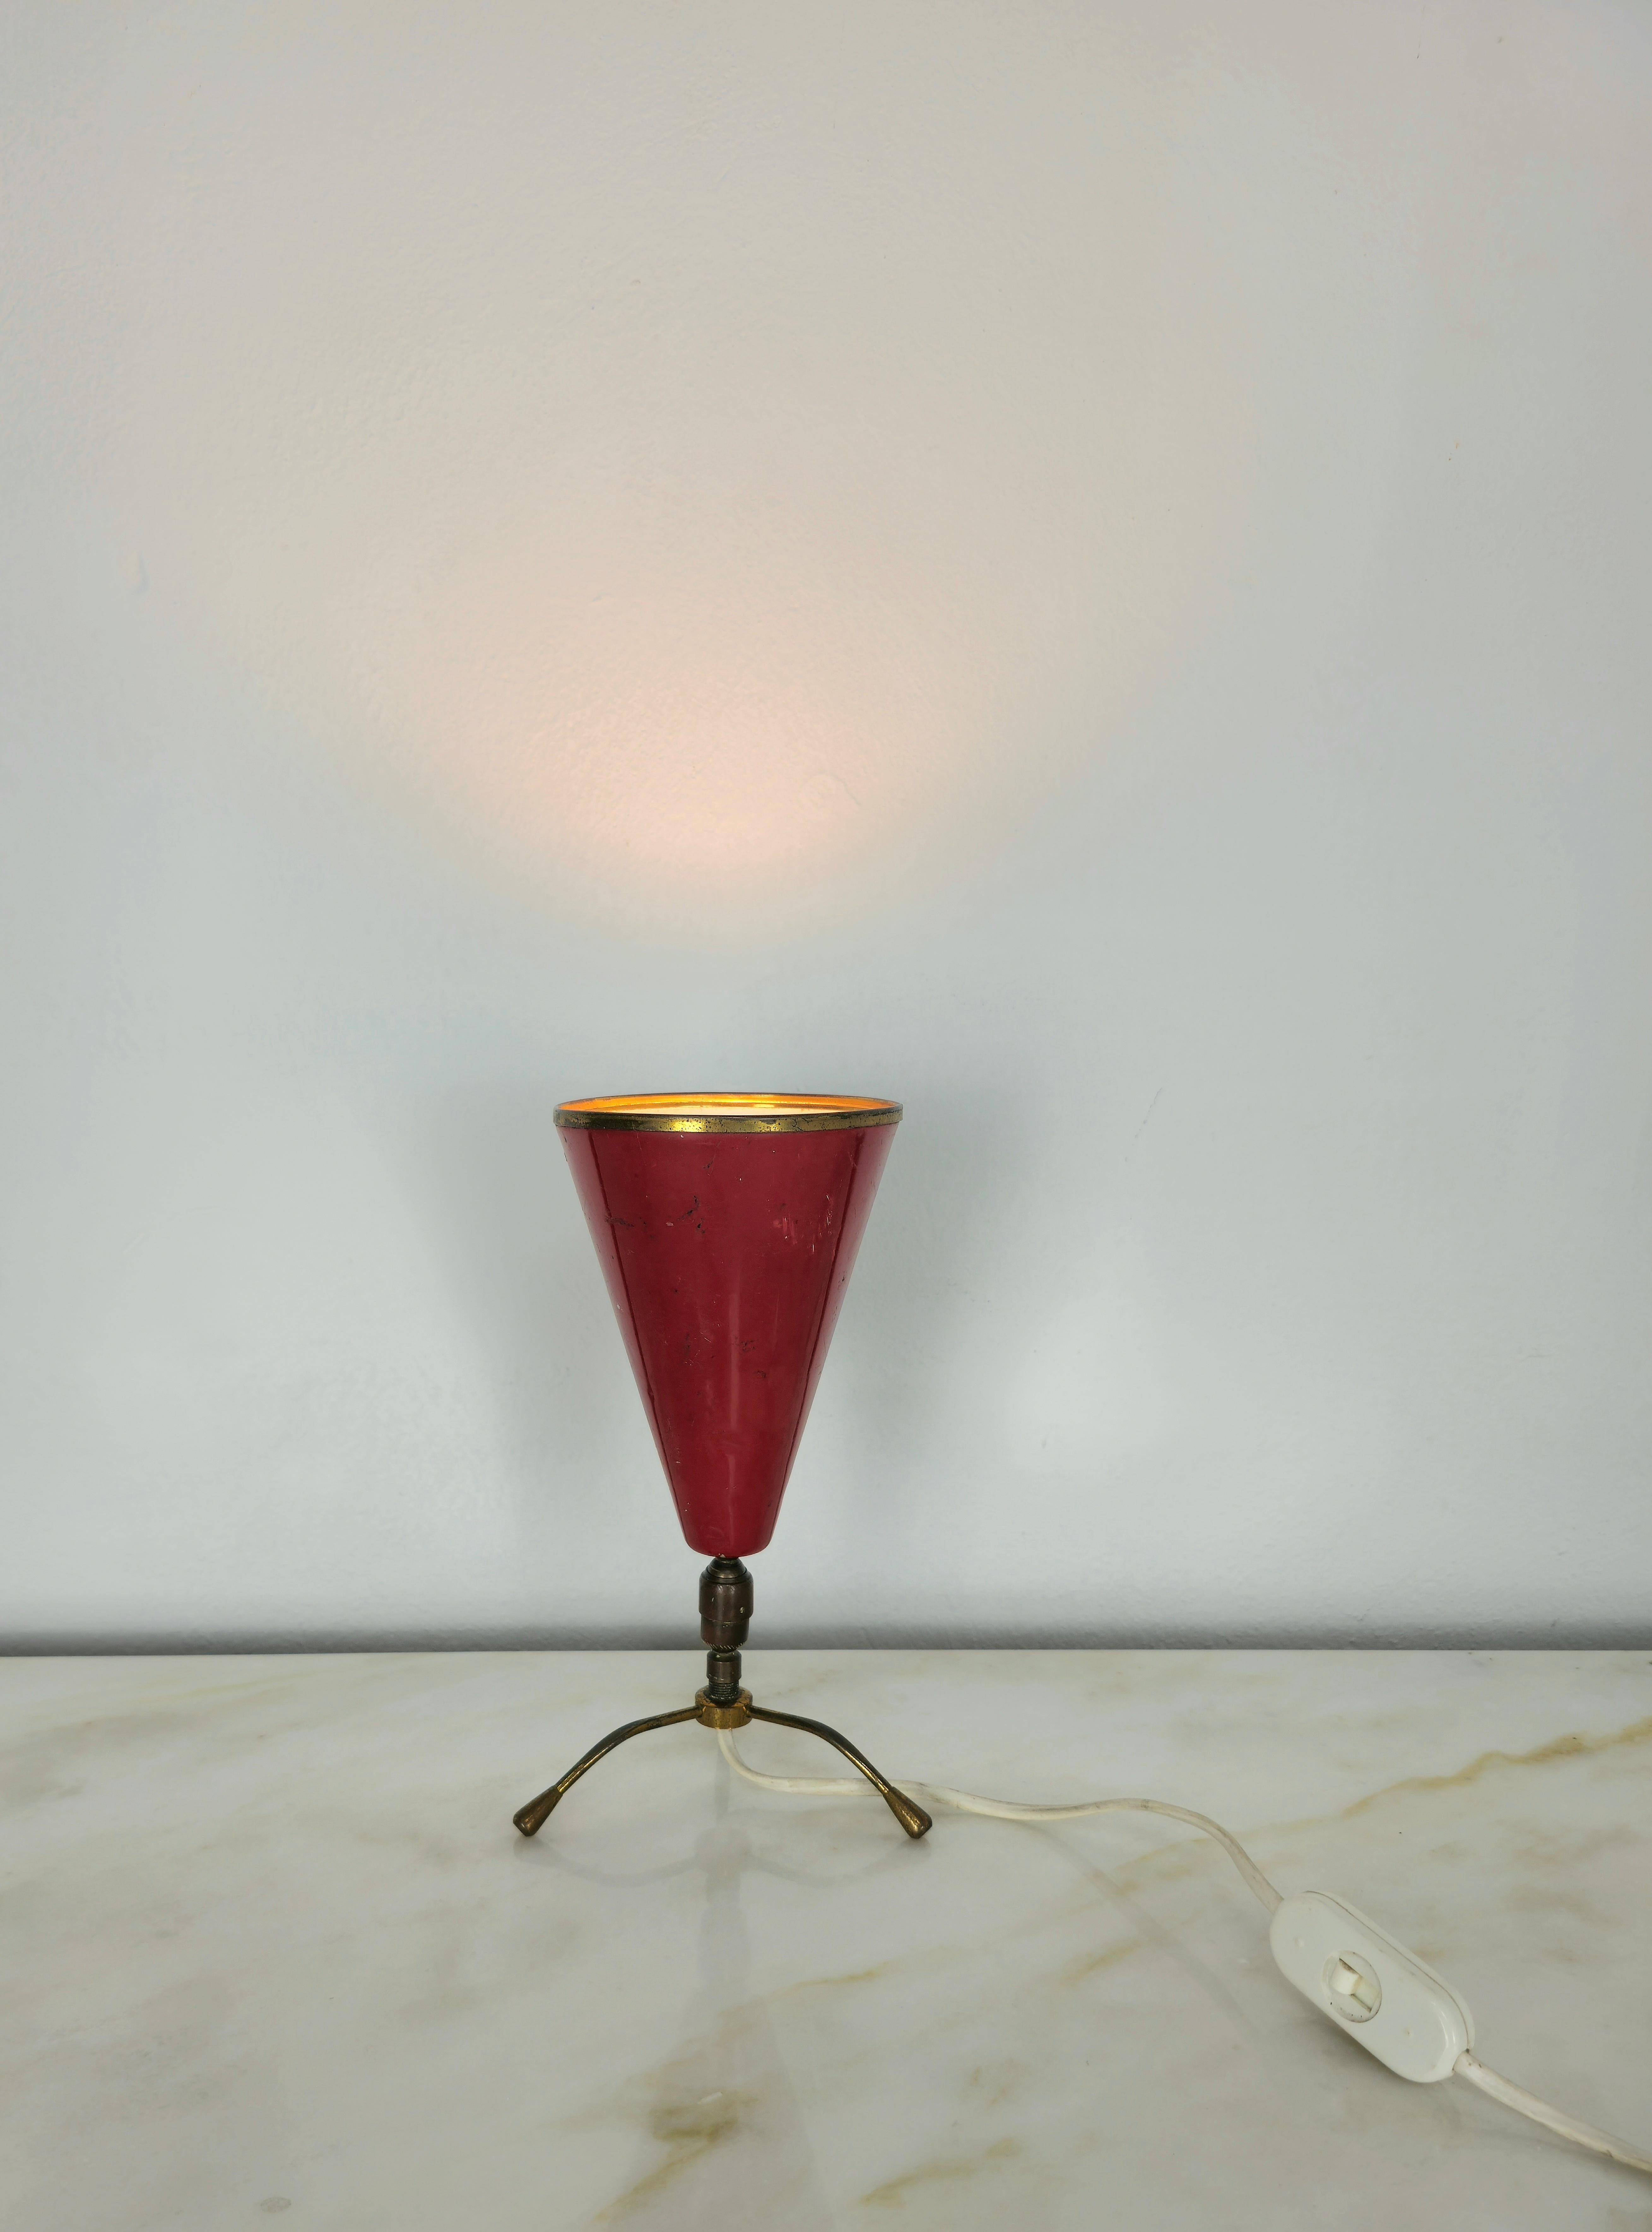 Enameled Table Lamp Attributable to Arredoluce Brass Aluminum Midcentury, Italy, 1950s For Sale